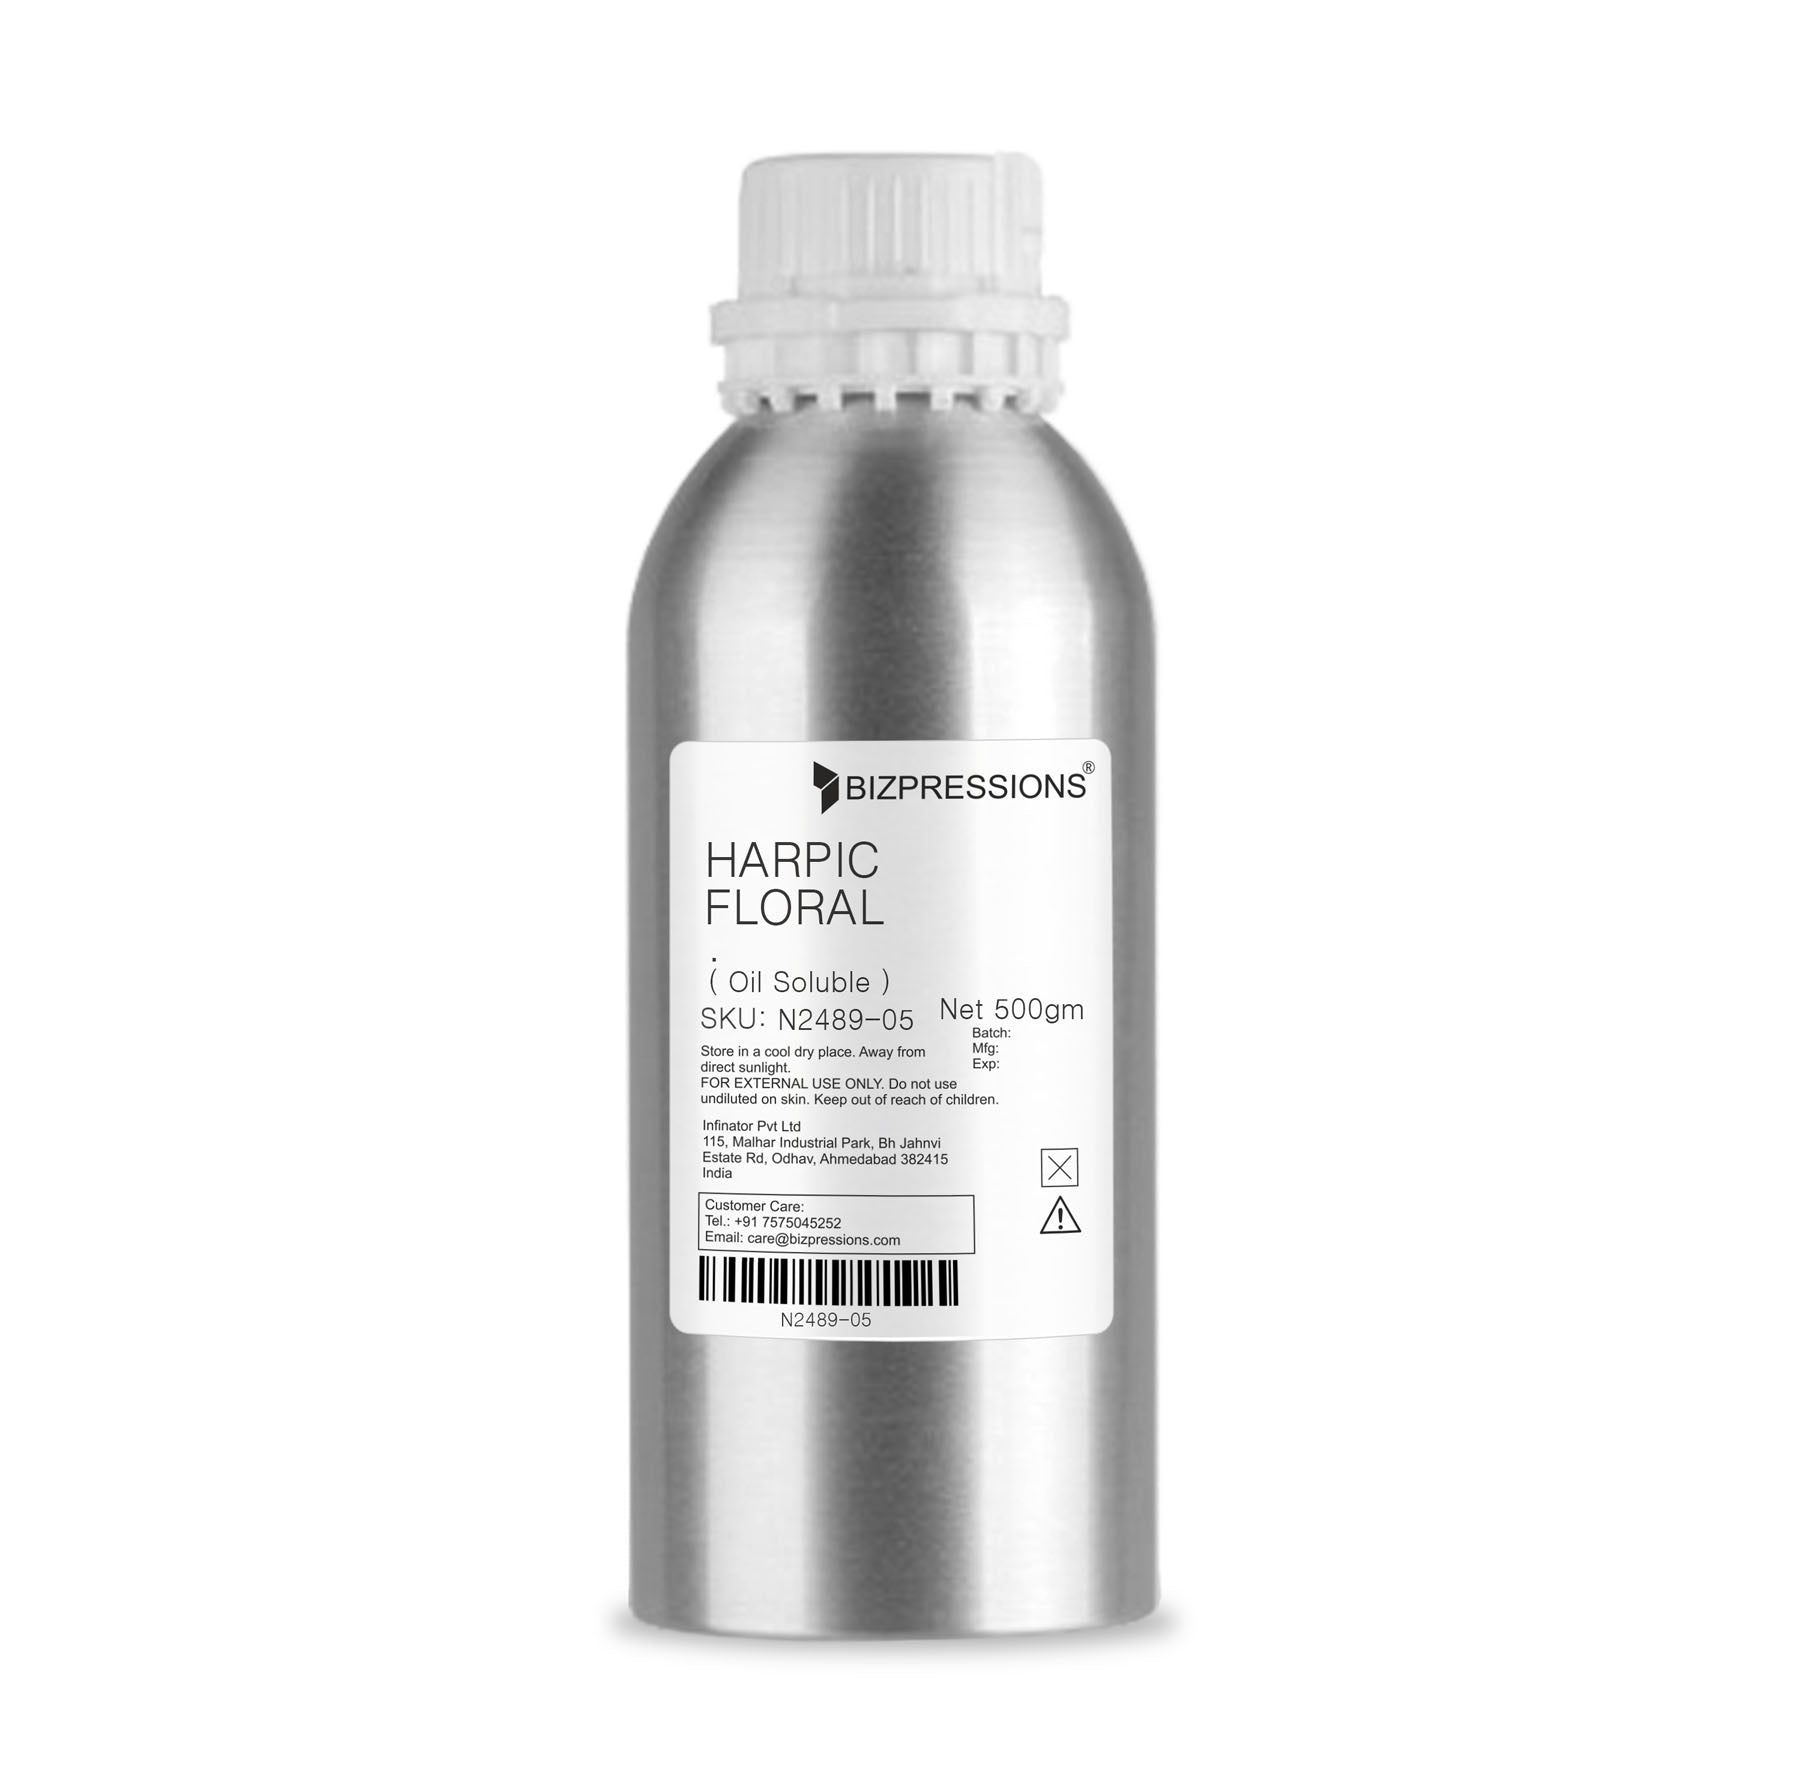 HARPIC FLORAL - Fragrance ( Oil Soluble ) - 500 gm